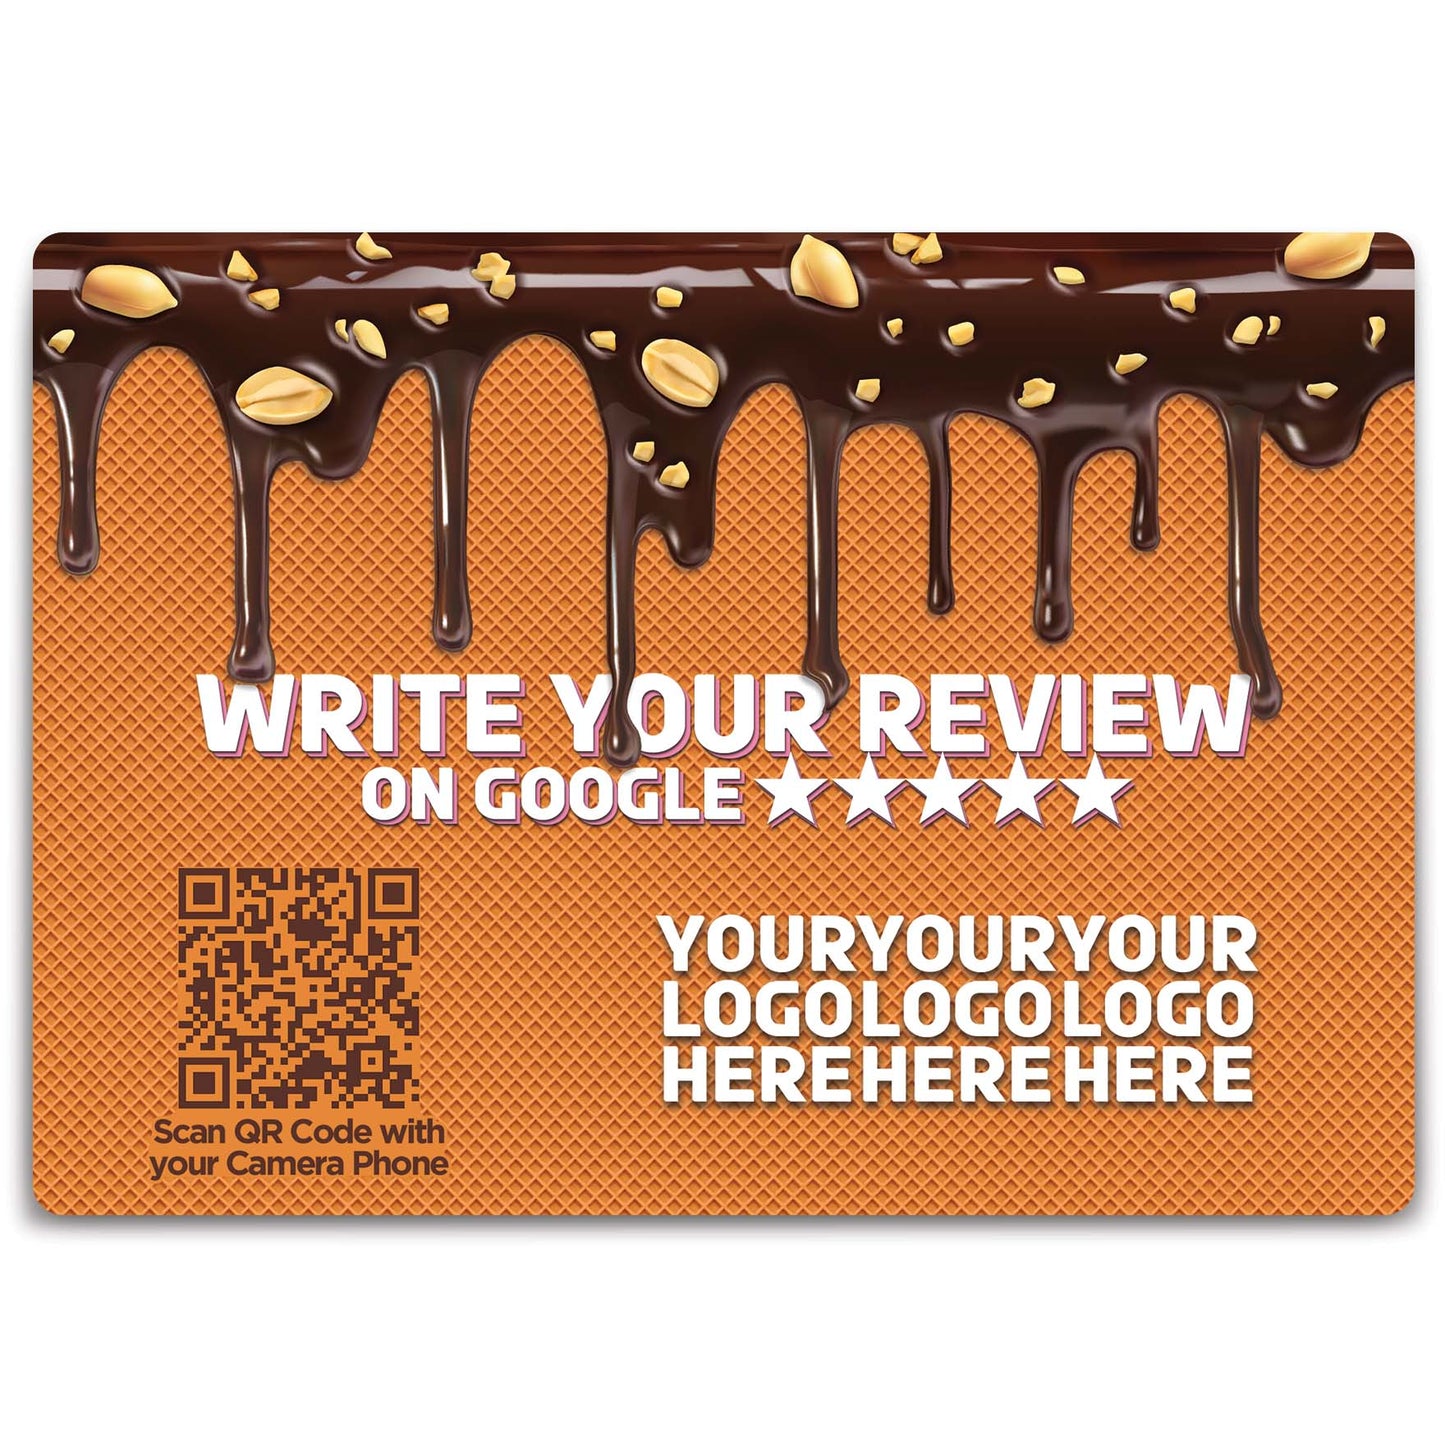 Marketing for Chocolatier to Get Google Reviews